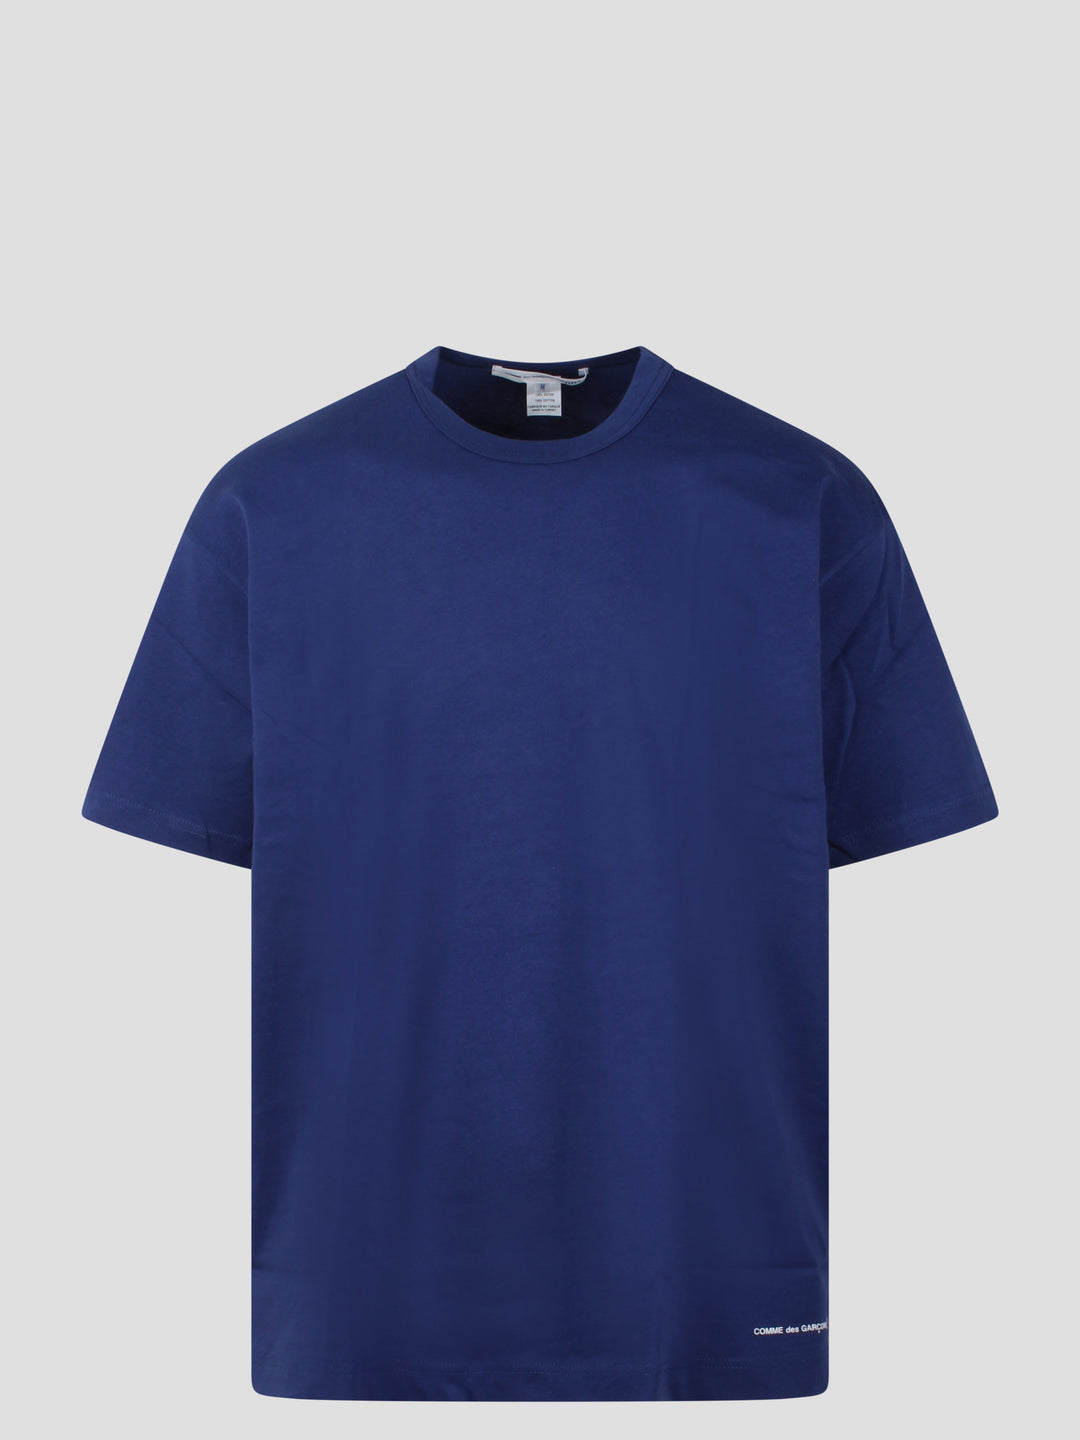 Jersey cotton basic t-shirt